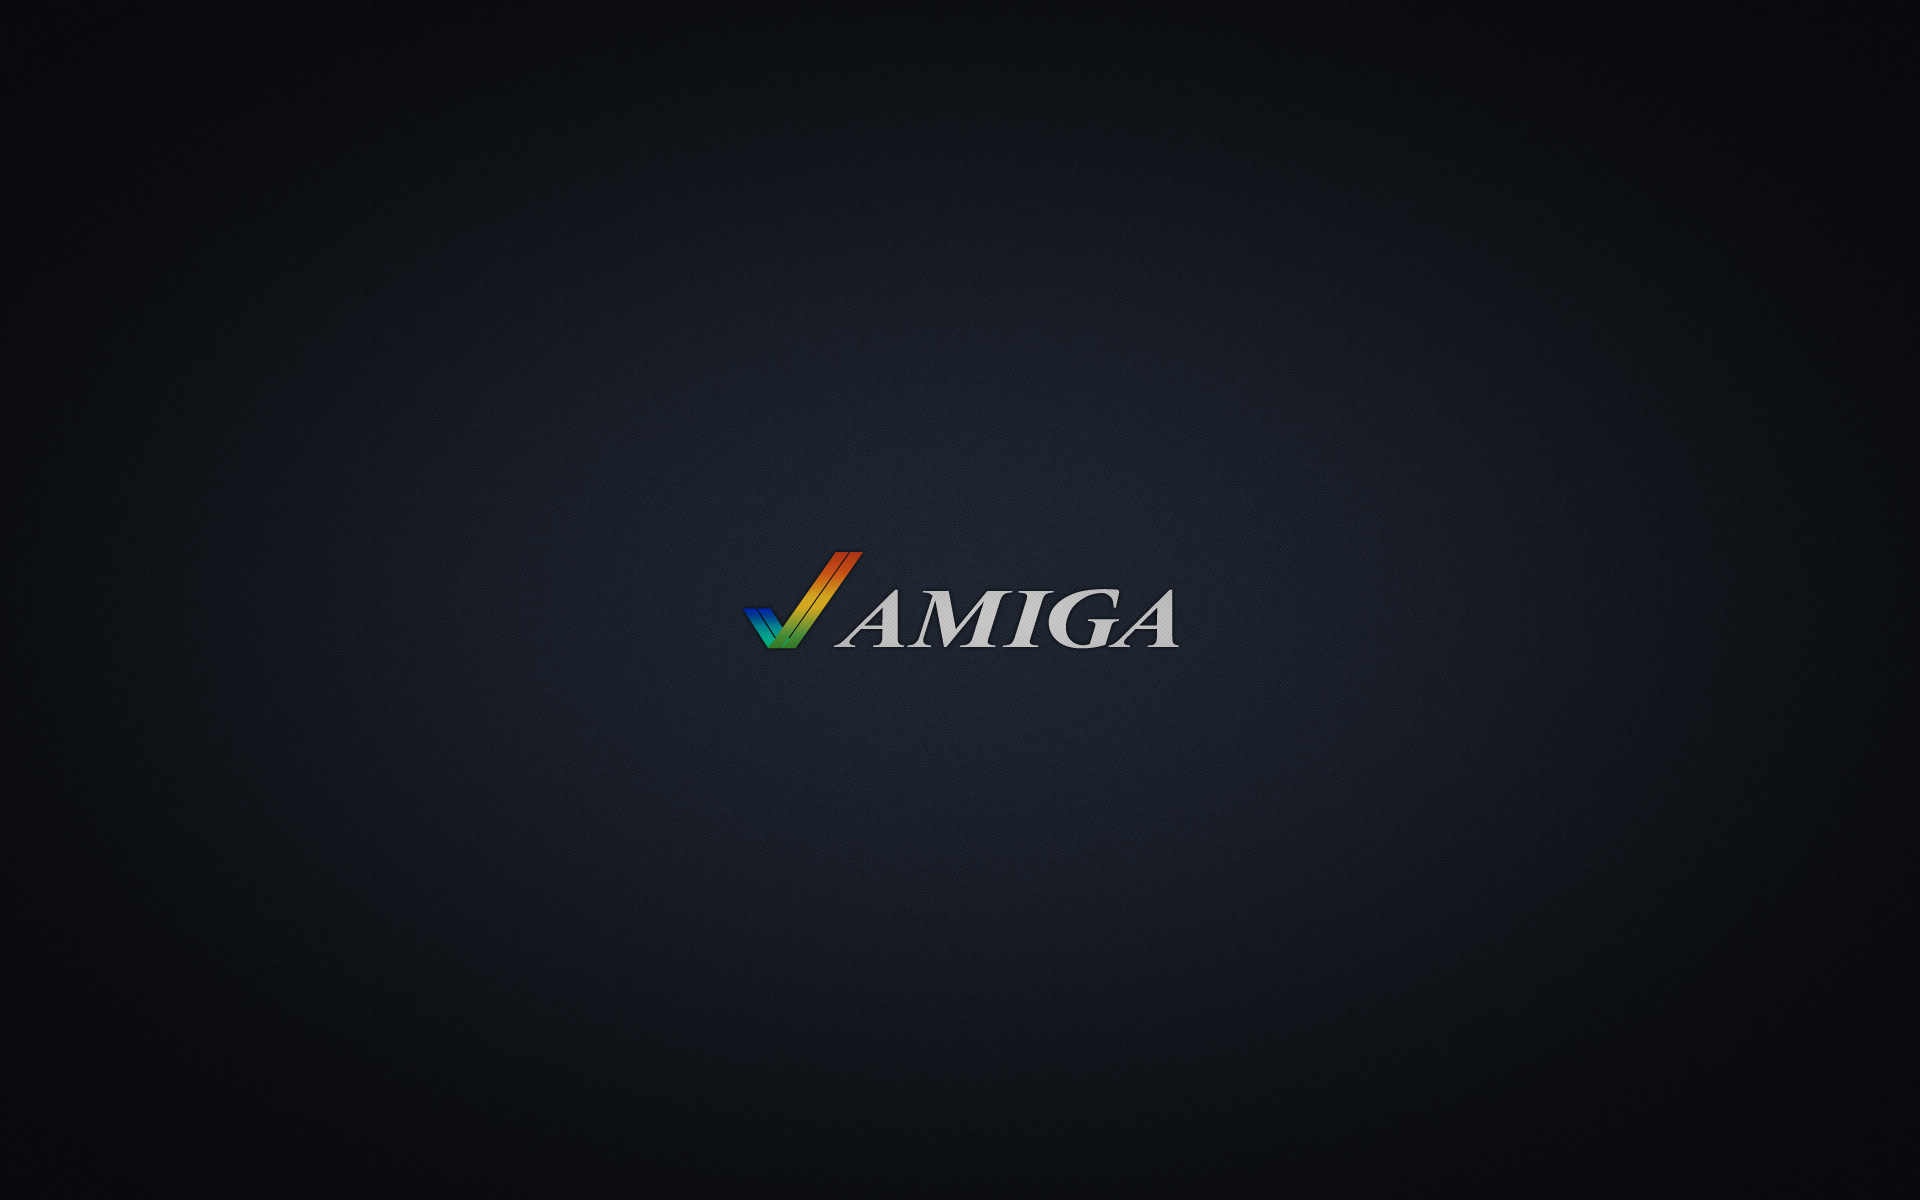 Amiga Logo Dark Blue Background By Pixeloza